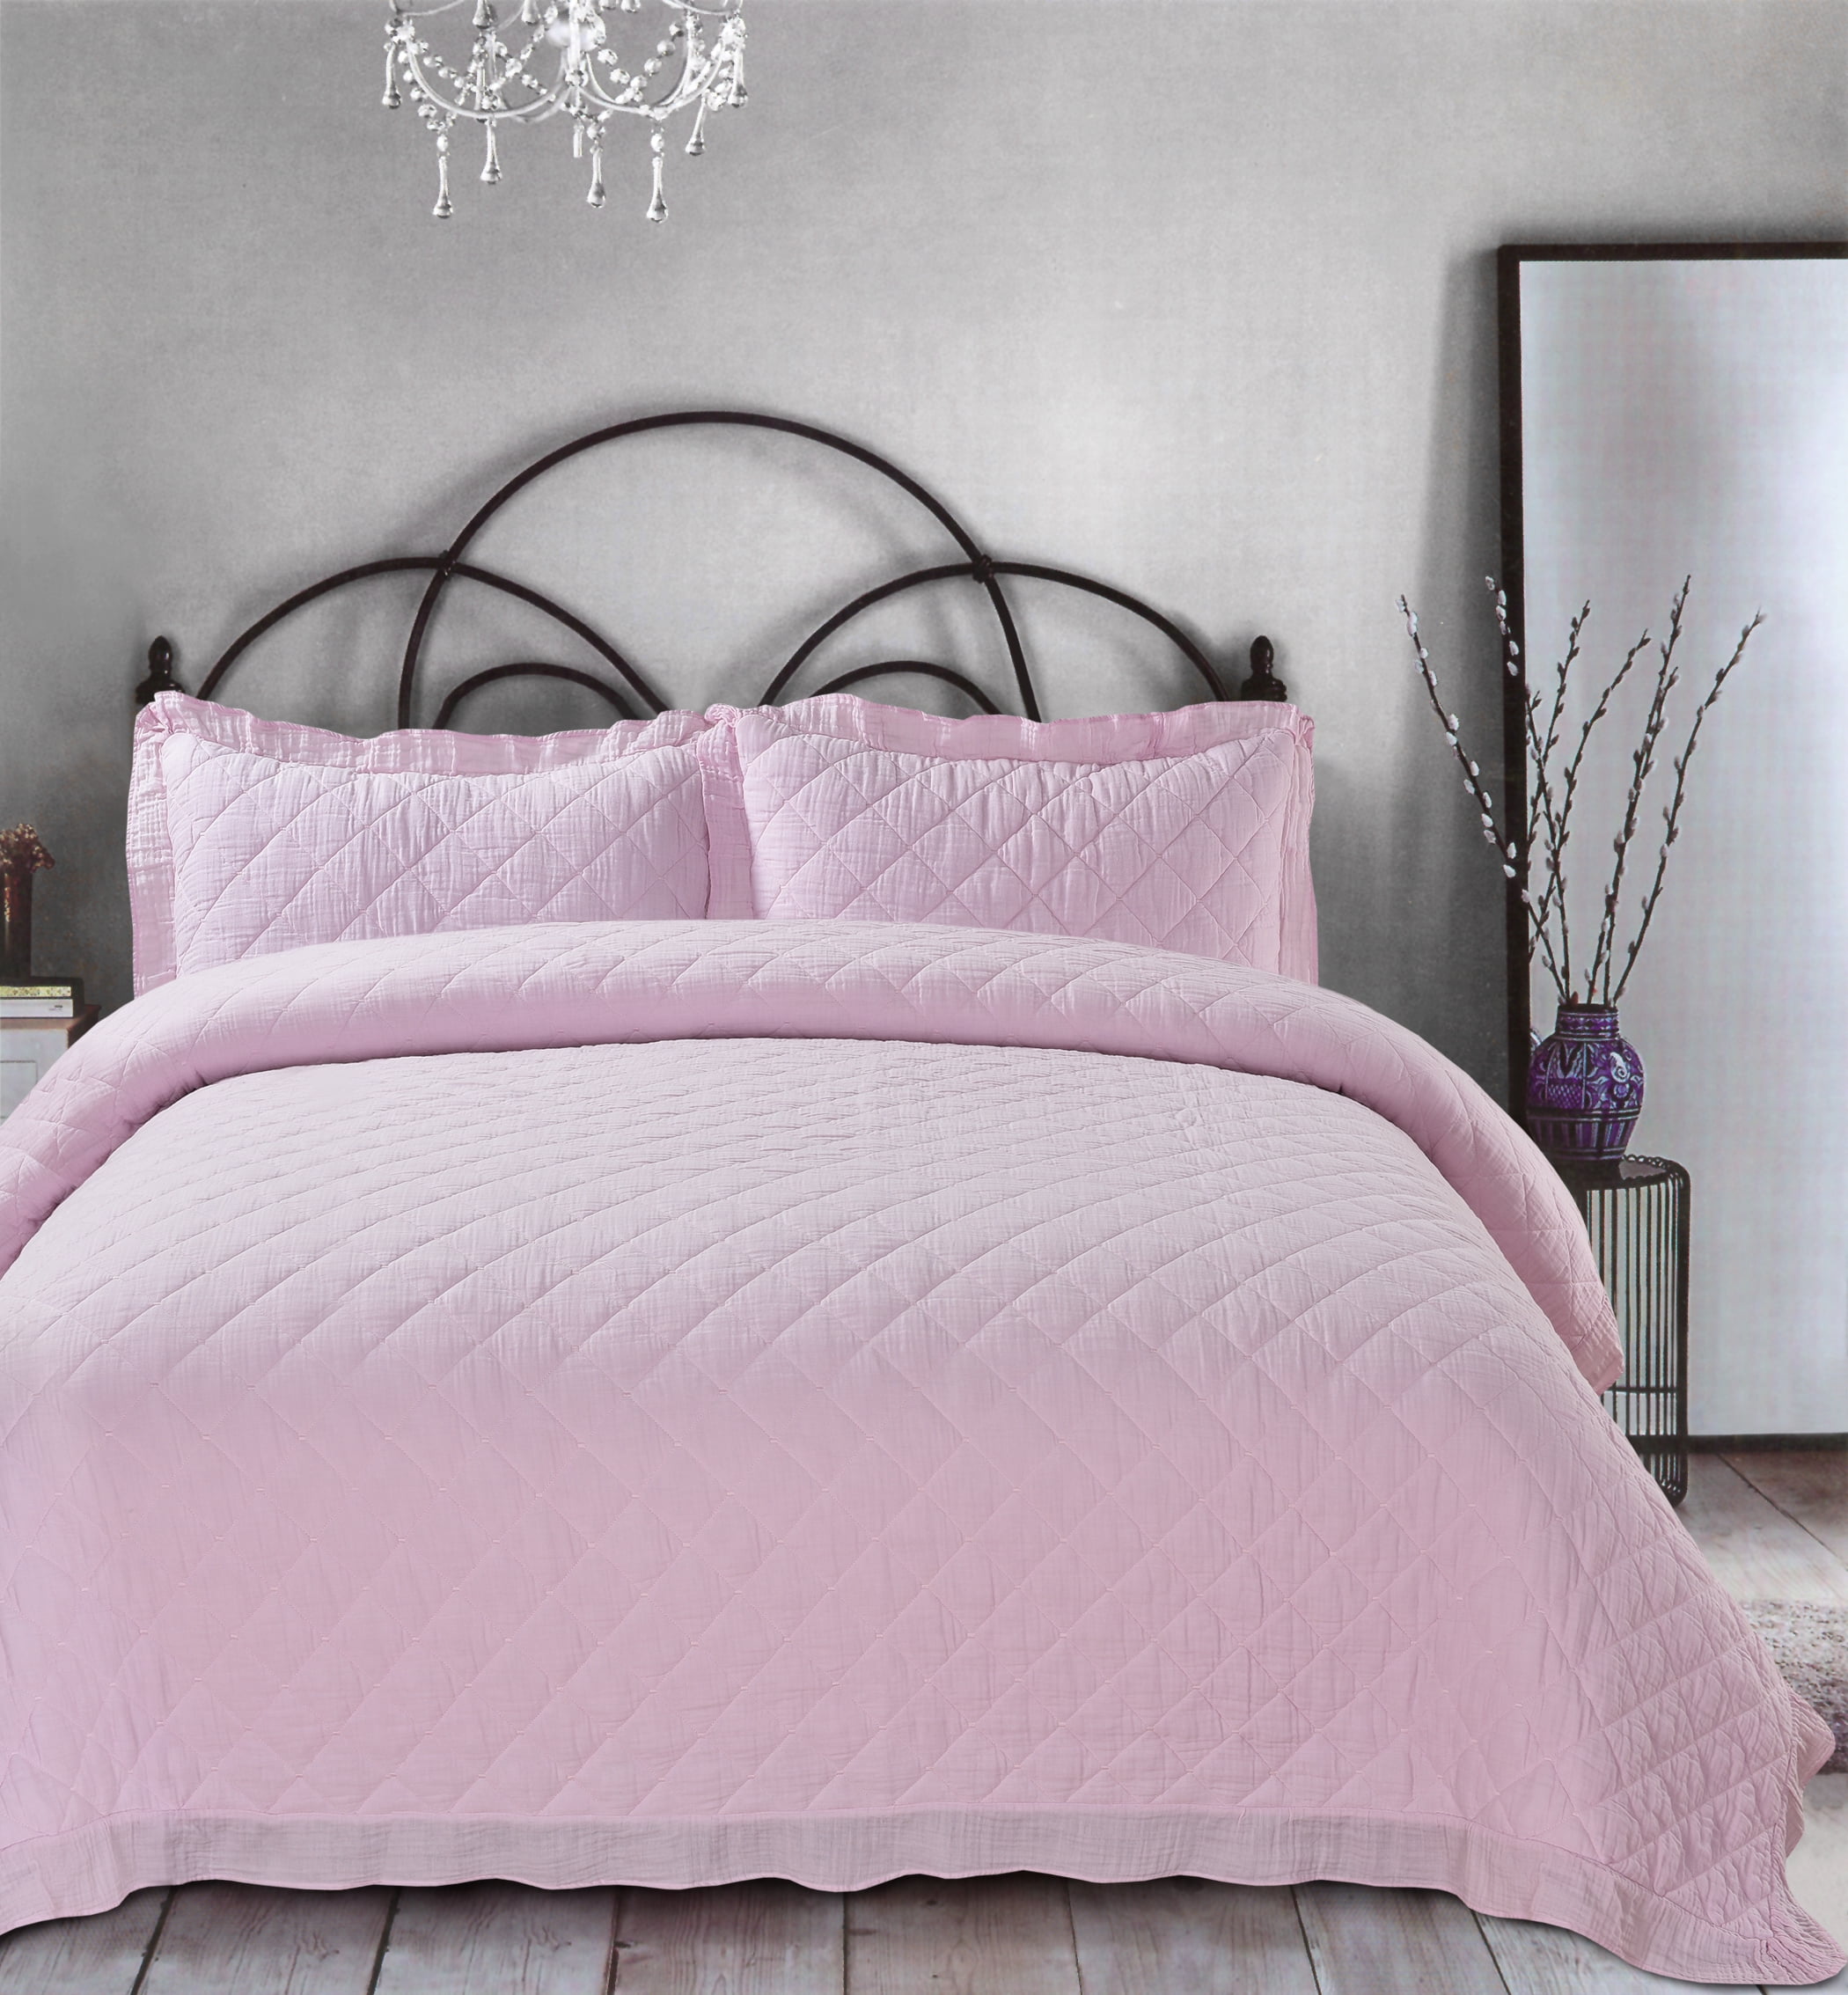 Threshold Gray Stitched Stripe Pillow Sham Standard Size 20"x26" 100 Cotton for sale online 